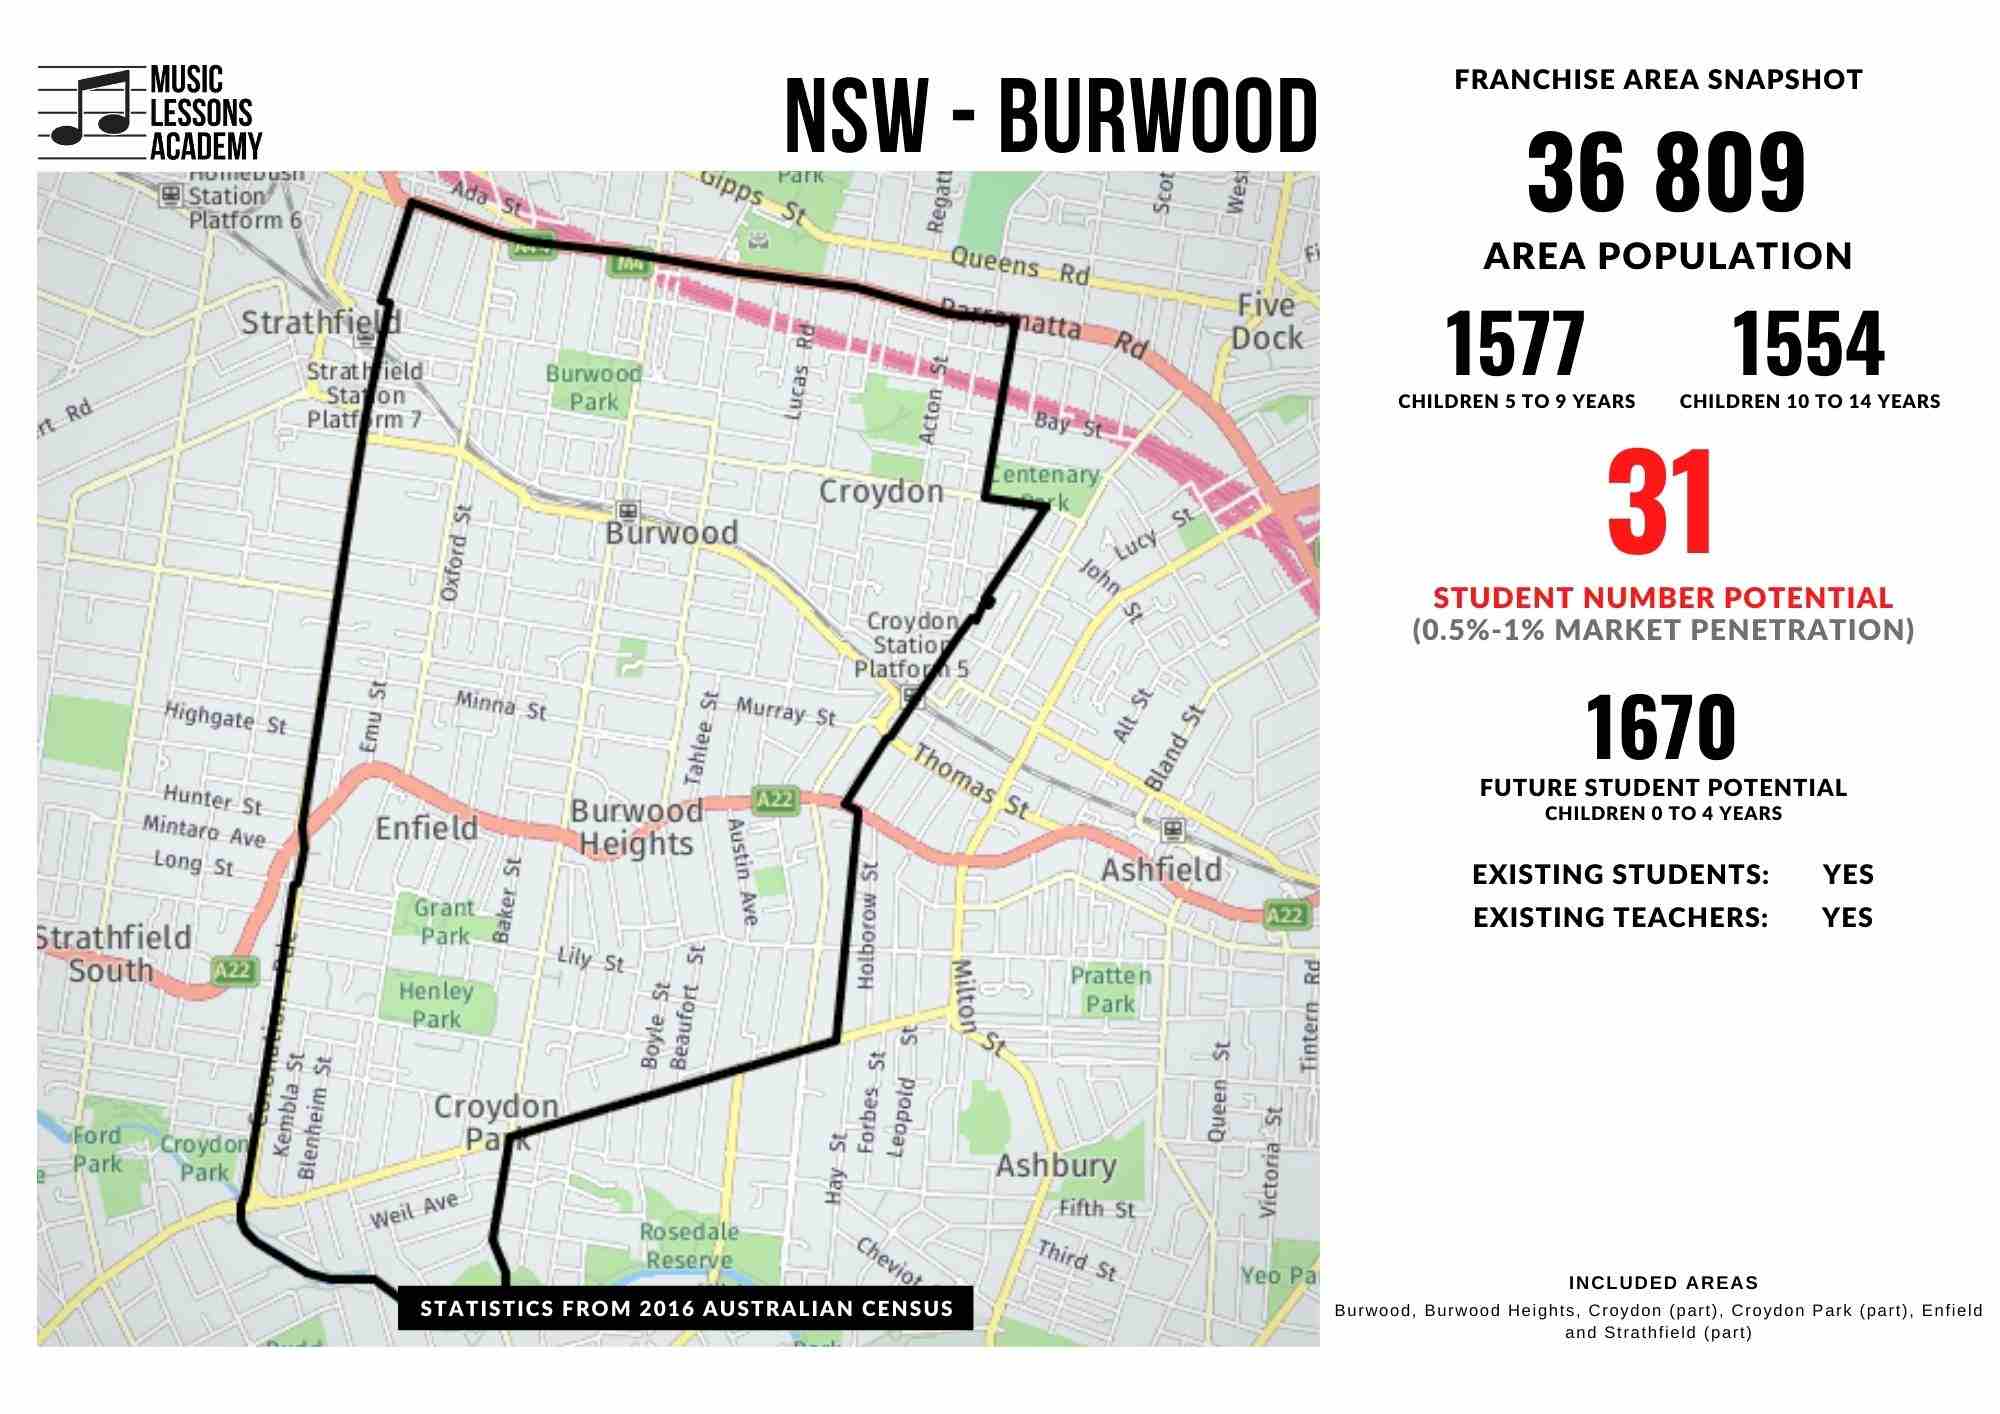 NSW Burwood Franchise for sale